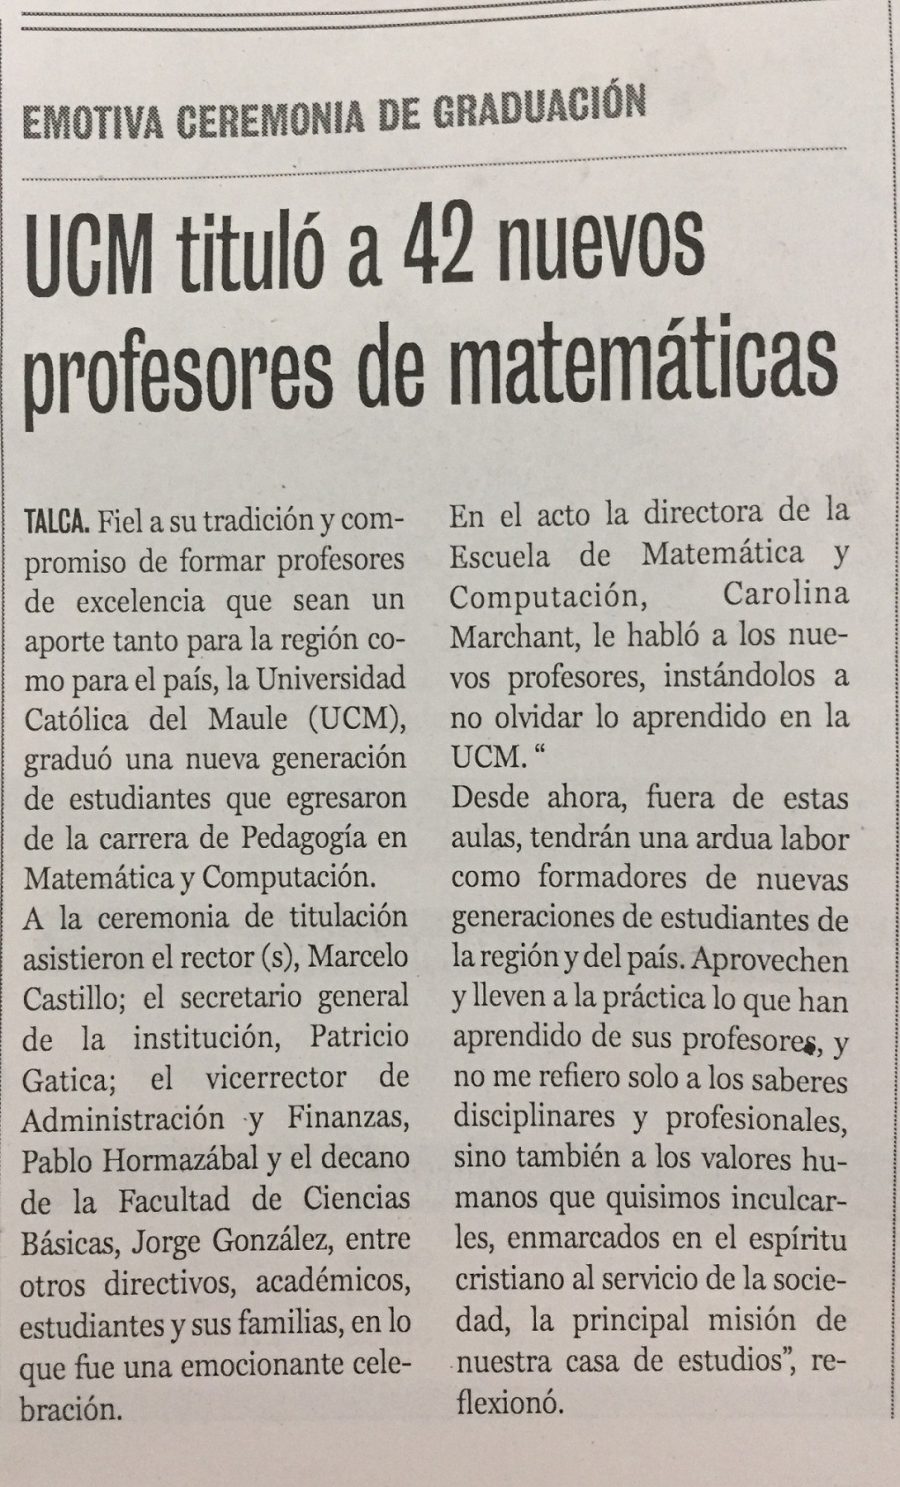 14 de octubre en Diario La Prensa: “UCM tituló a 42 nuevos profesores de matemáticas”